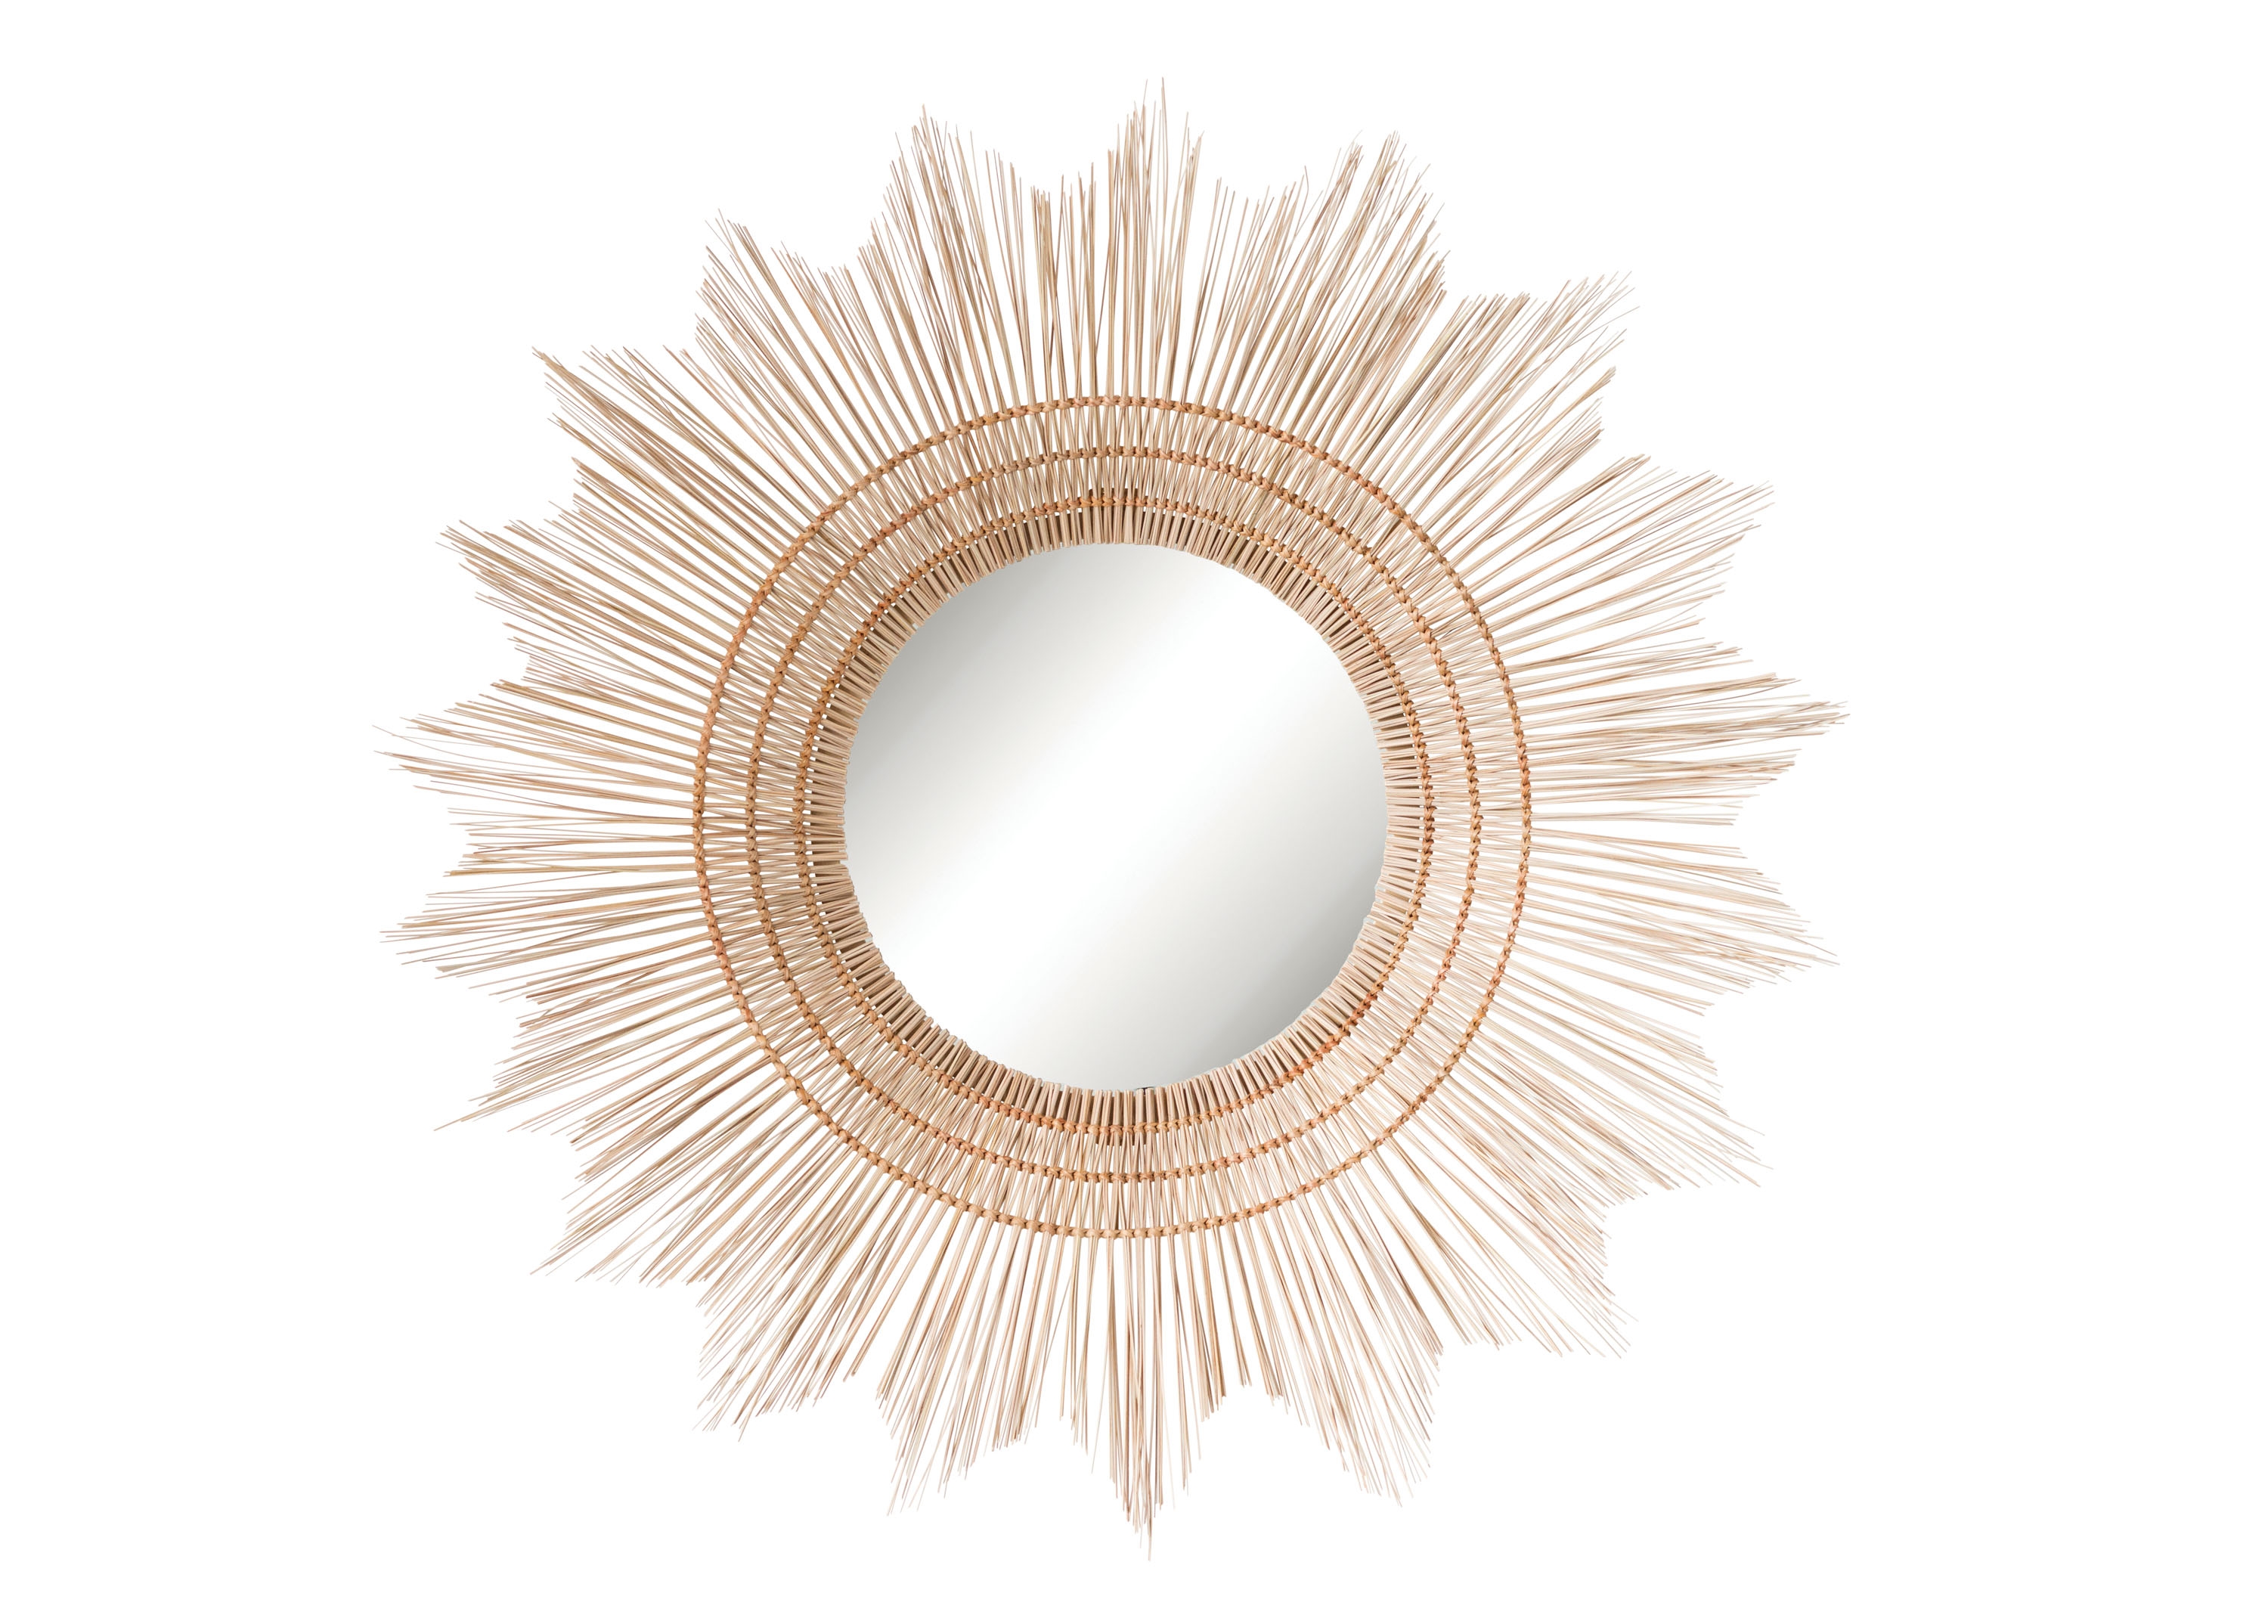 Handmade Sunburst Wicker Wall Mirror - Image 0